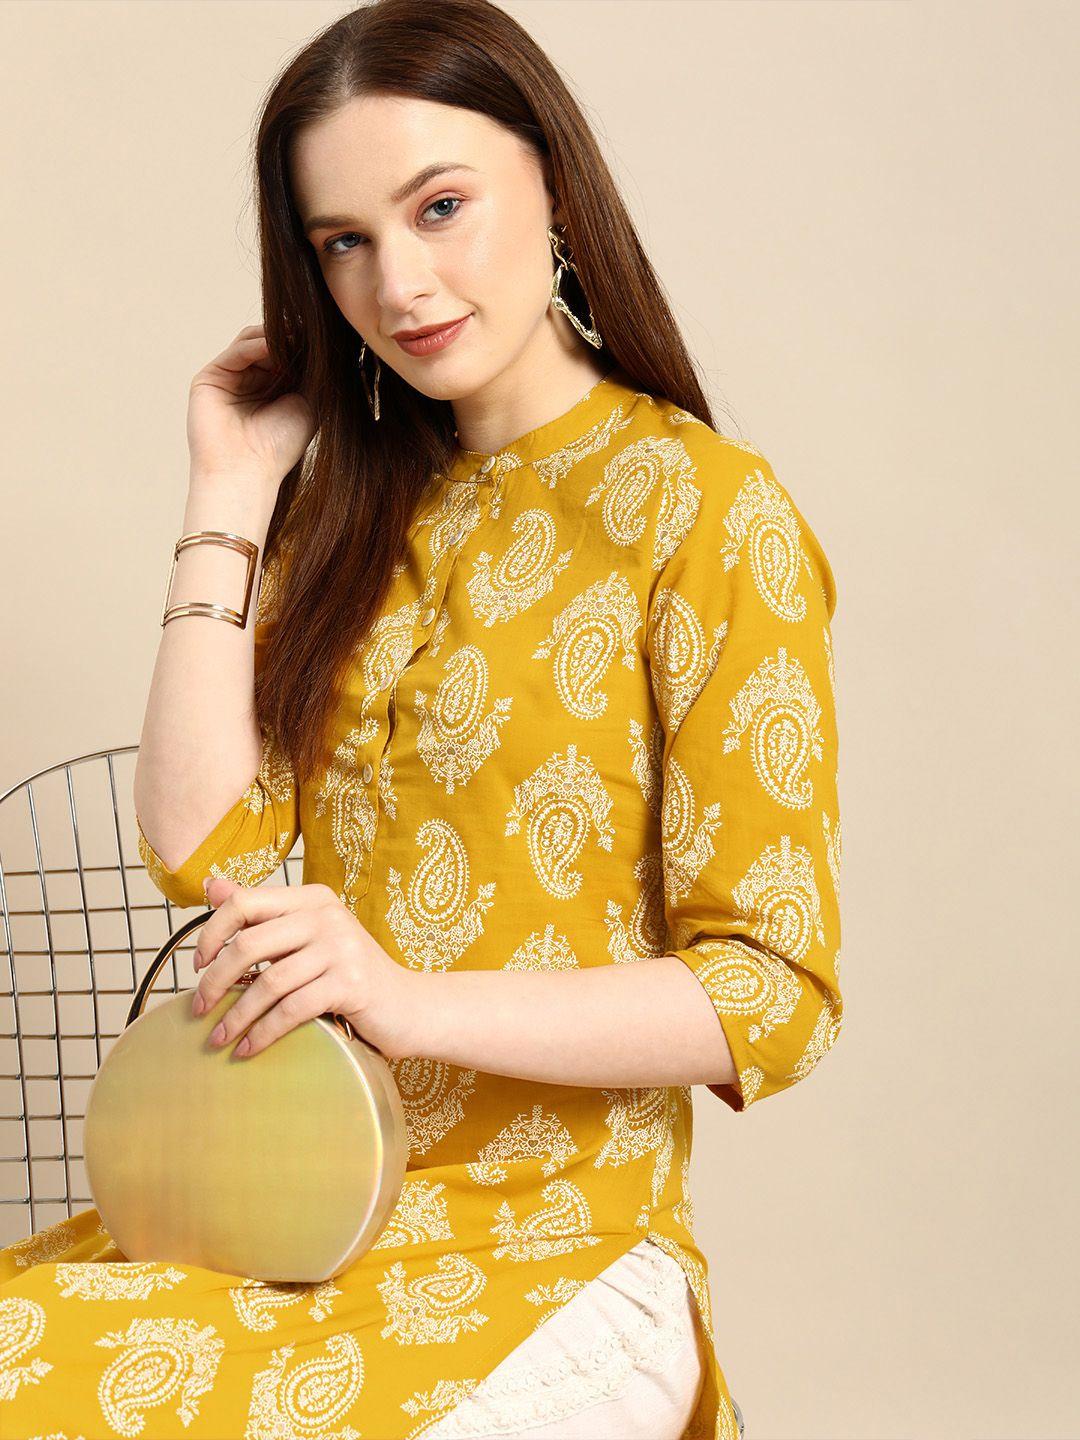 all-about-you-women-yellow-&-white-ethnic-motifs-printed-regular-kurta